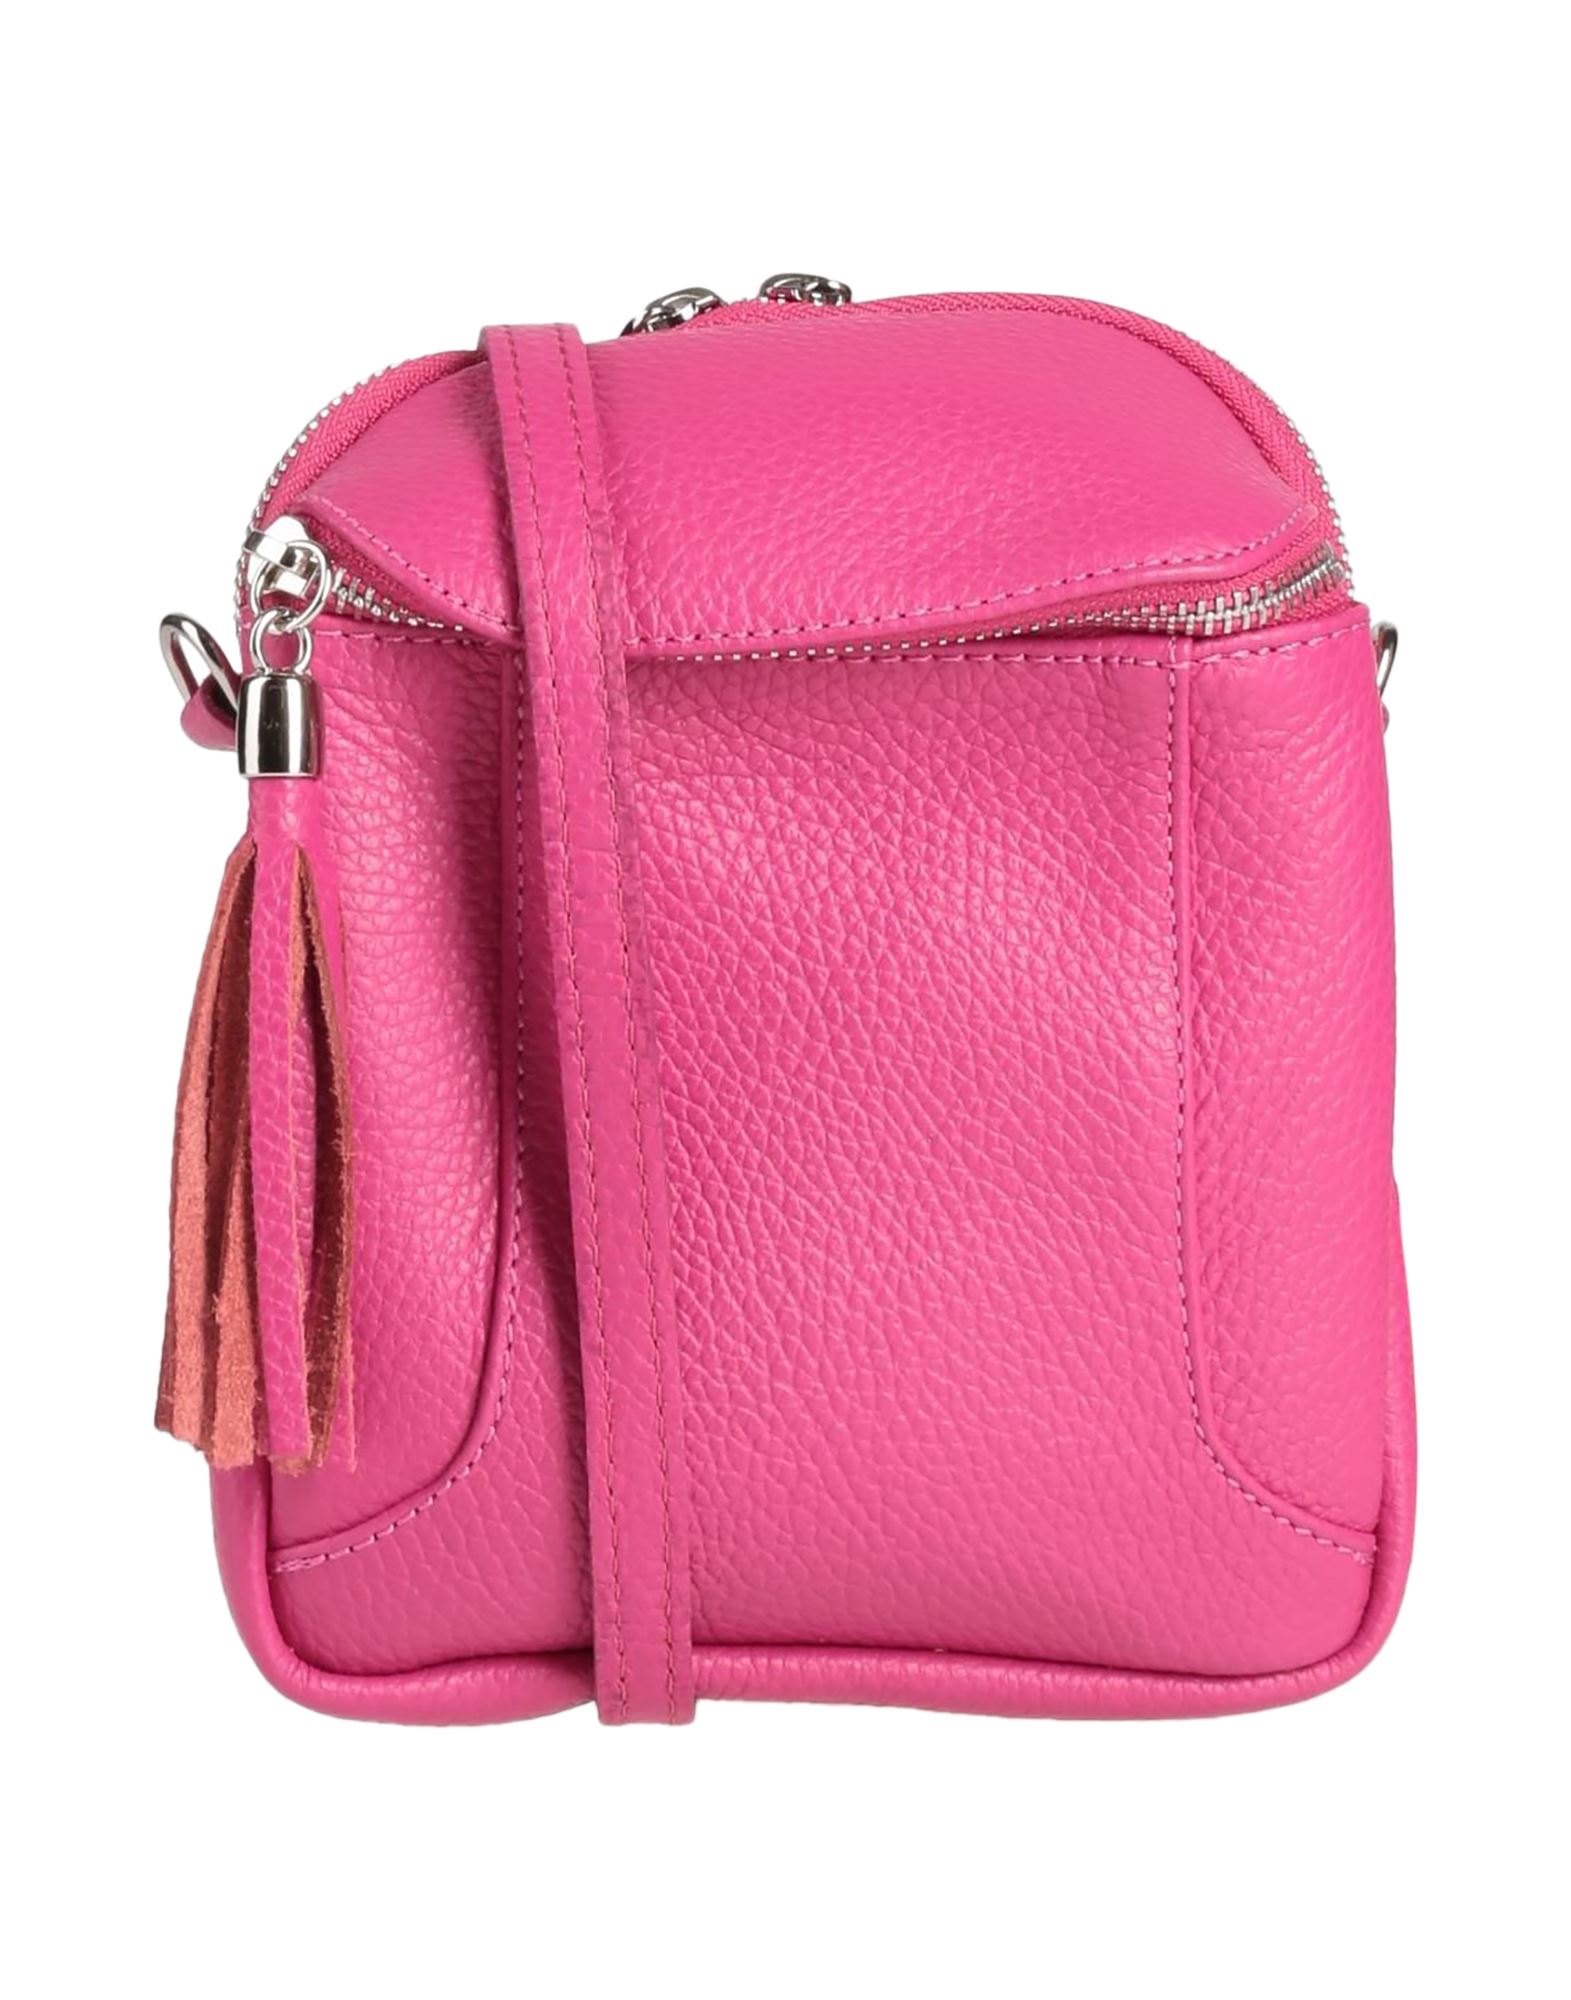 AB Asia Bellucci Woman Handbag Sky Blue Size -- Soft Leather